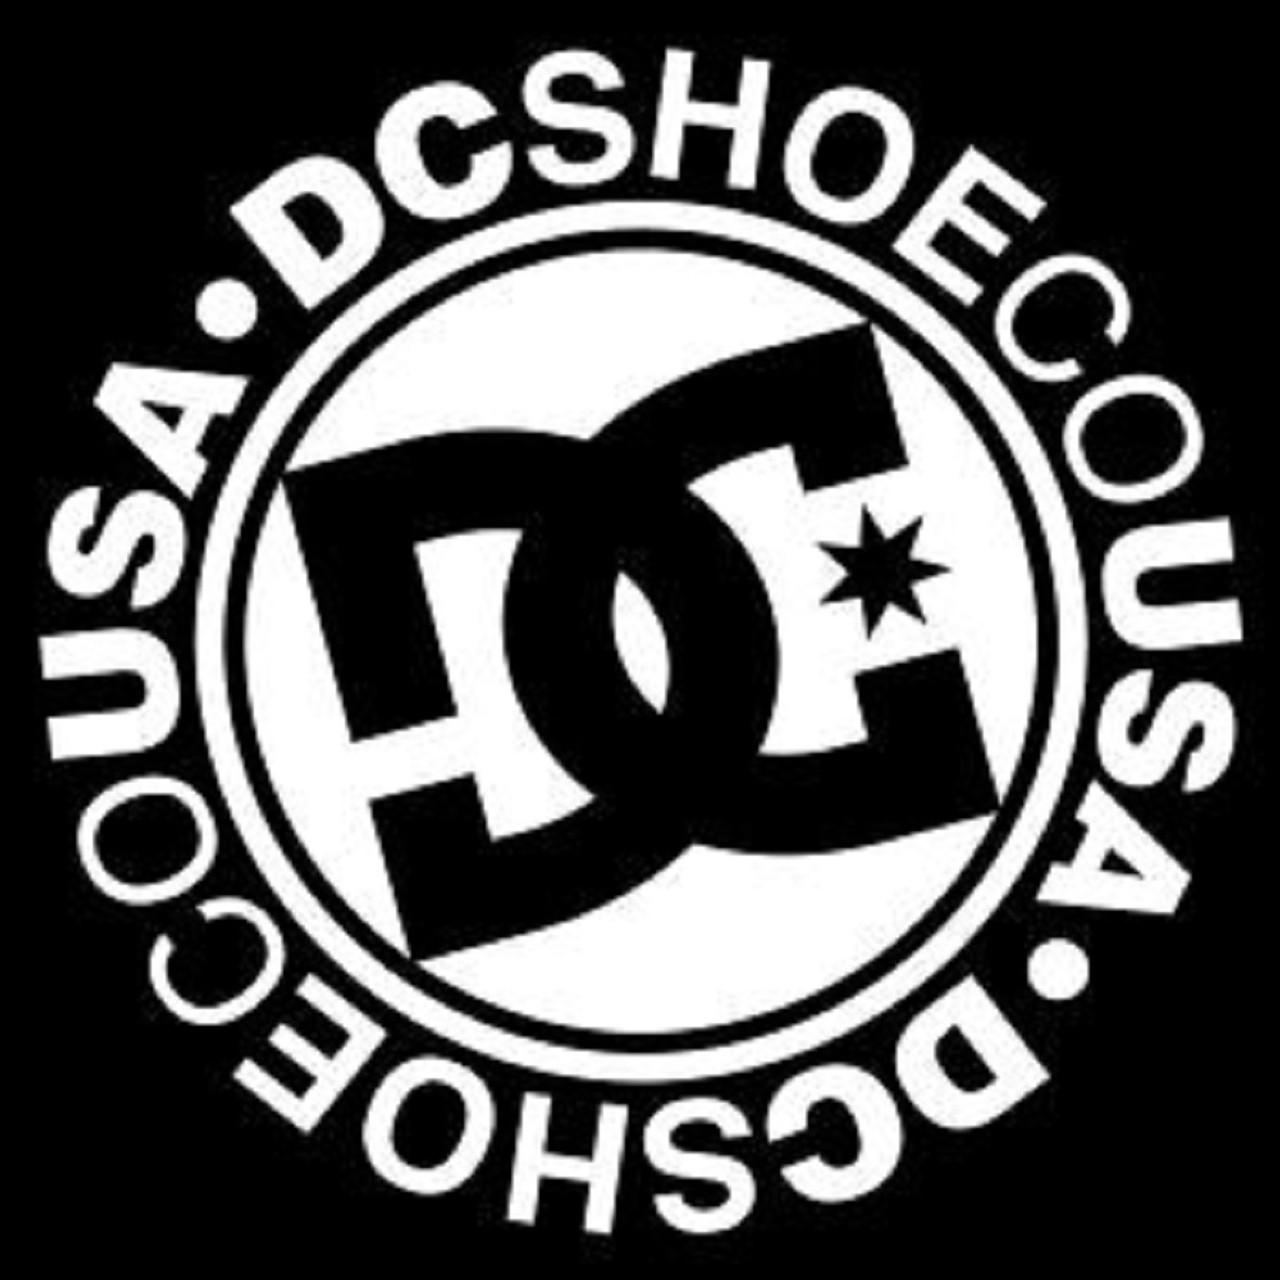 DC Shoe Co Sticker (2 pack) Black White 4" Round